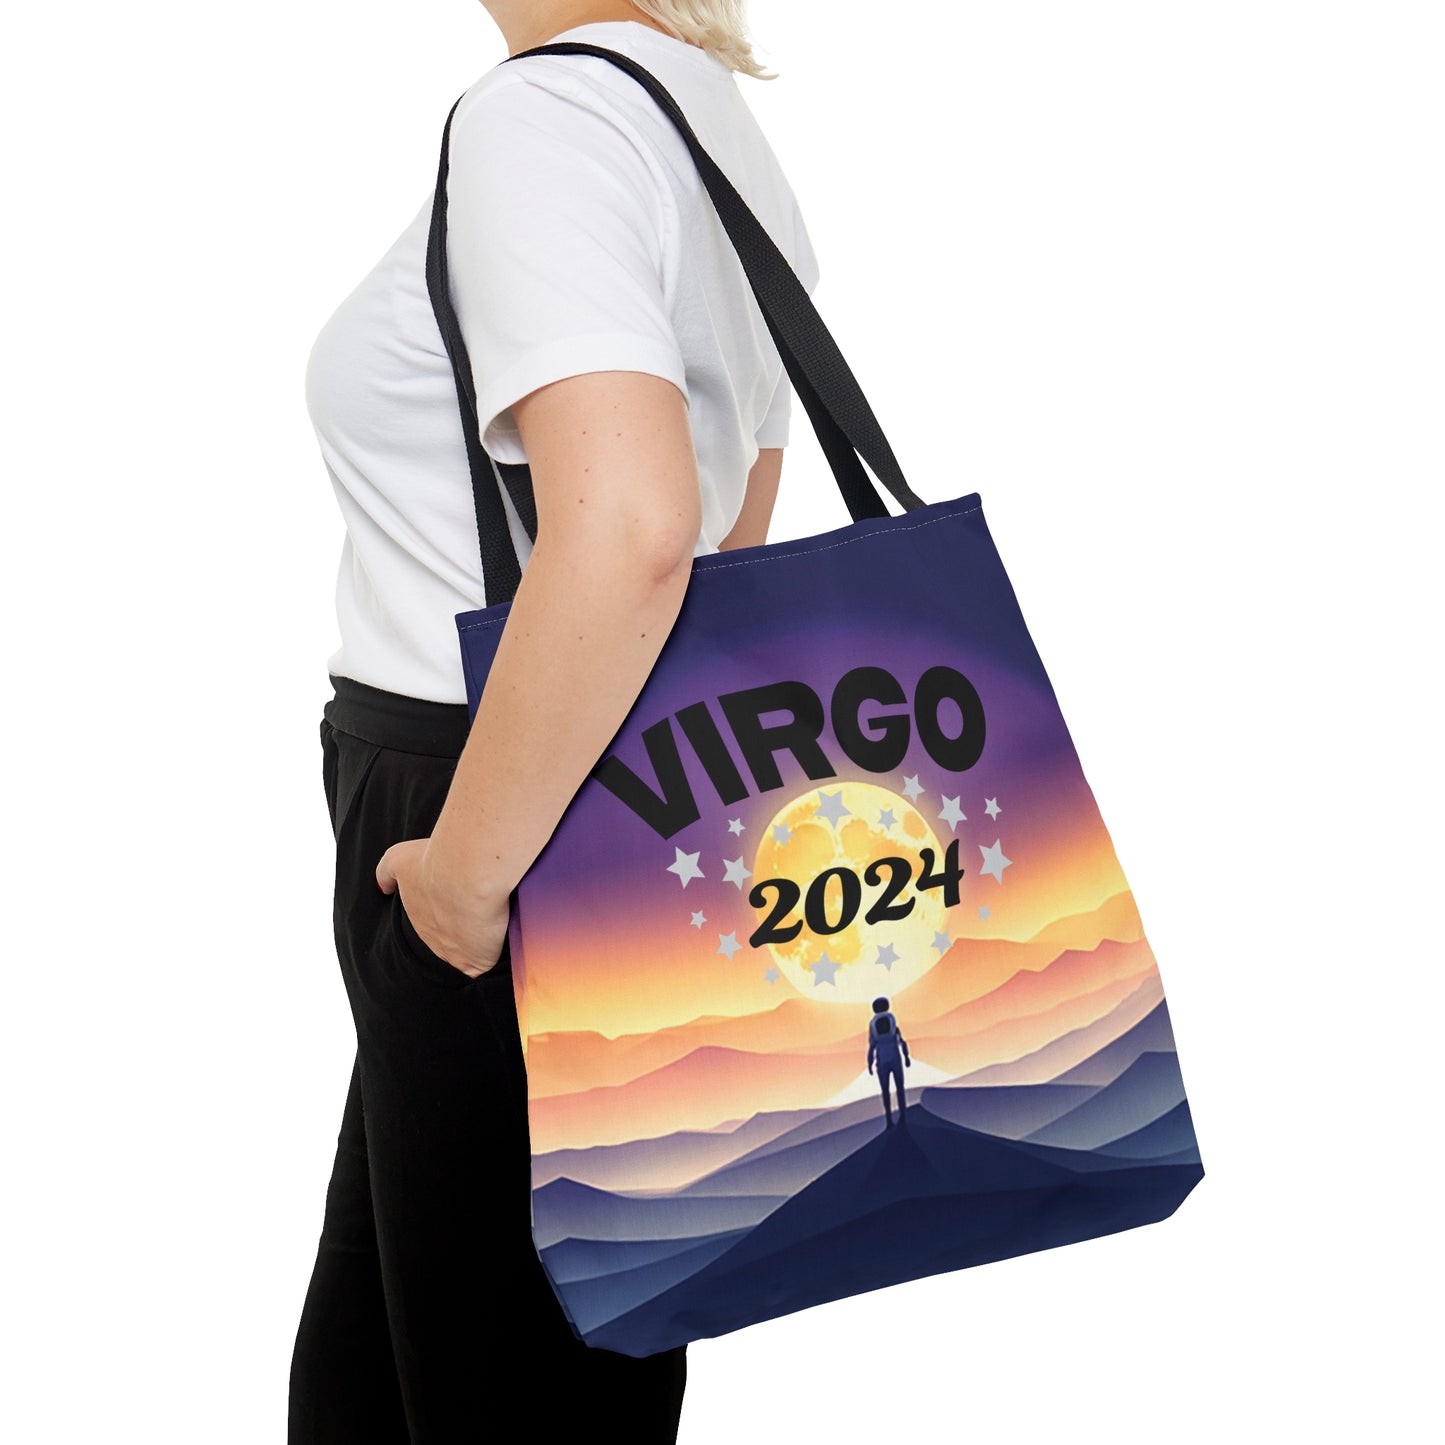 Virgo 2024 Tote Bag